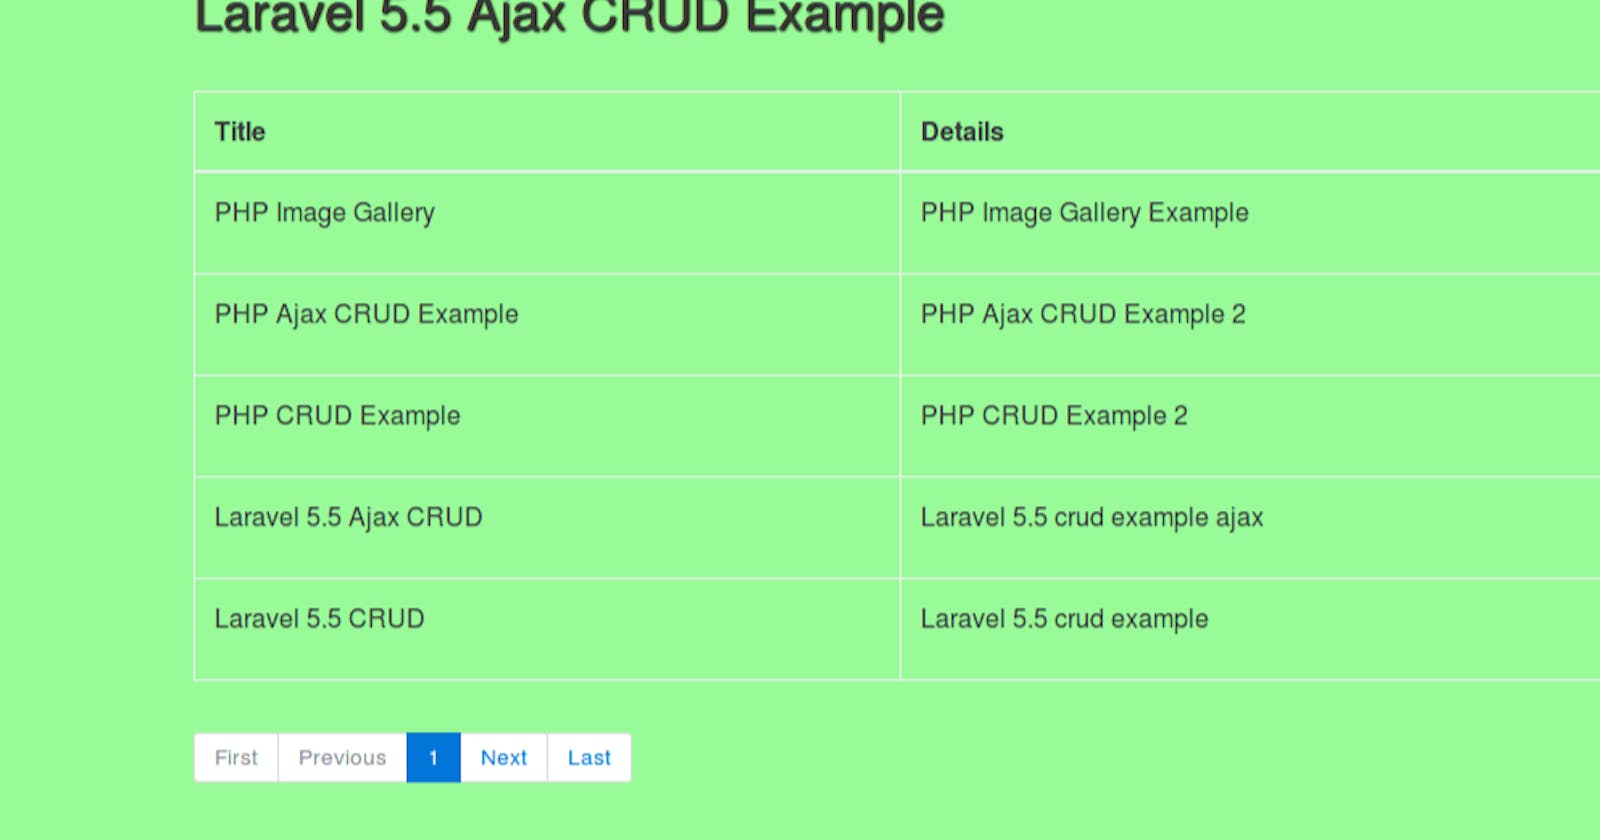 PHP Laravel 5.5 - CRUD Application using JQuery Ajax